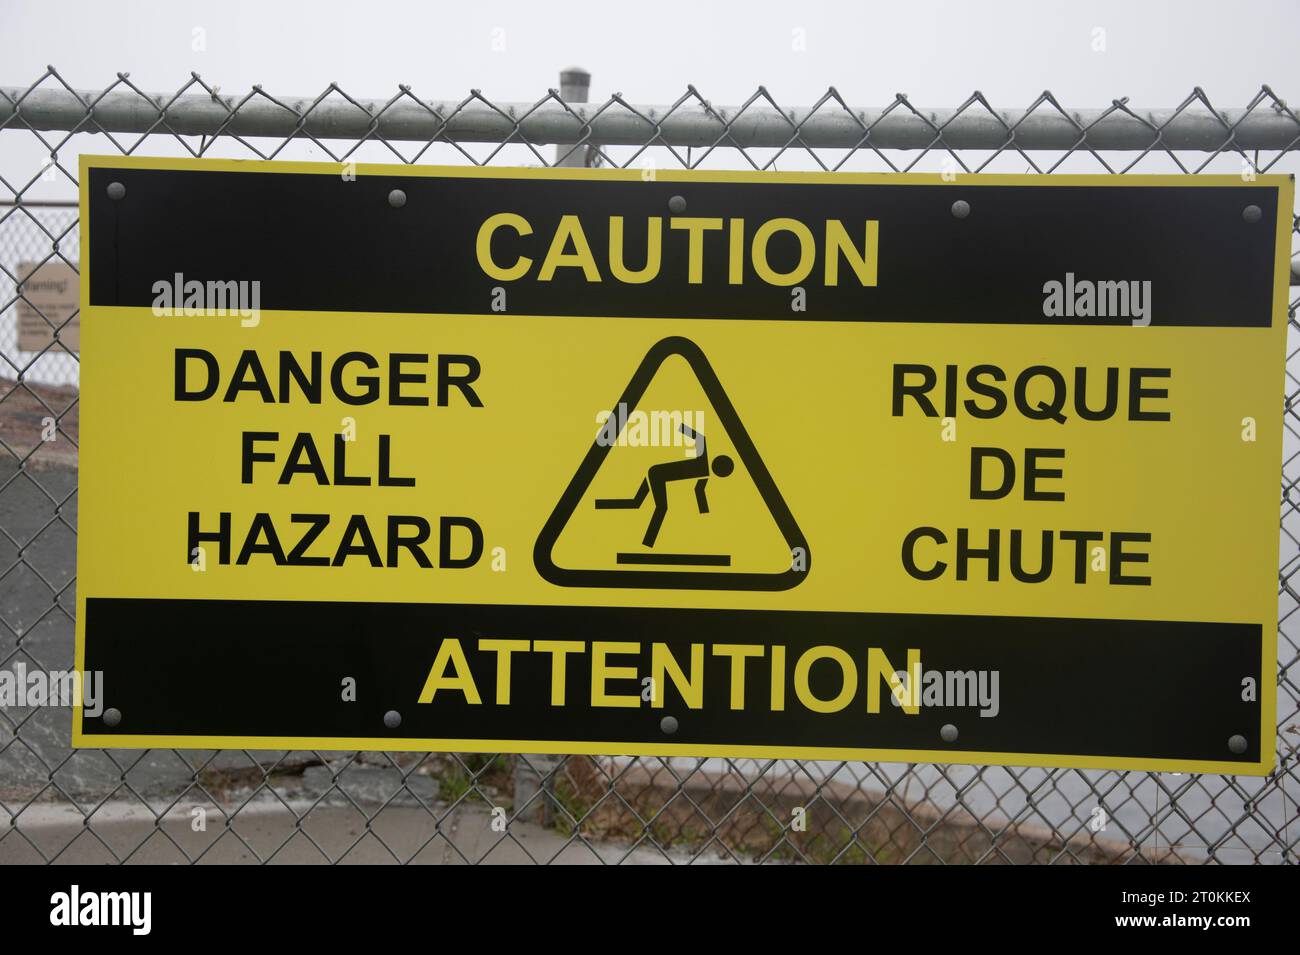 Hazard warning sign at Fort Amherst in St. John's, Newfoundland & Labrador, Canada Stock Photo